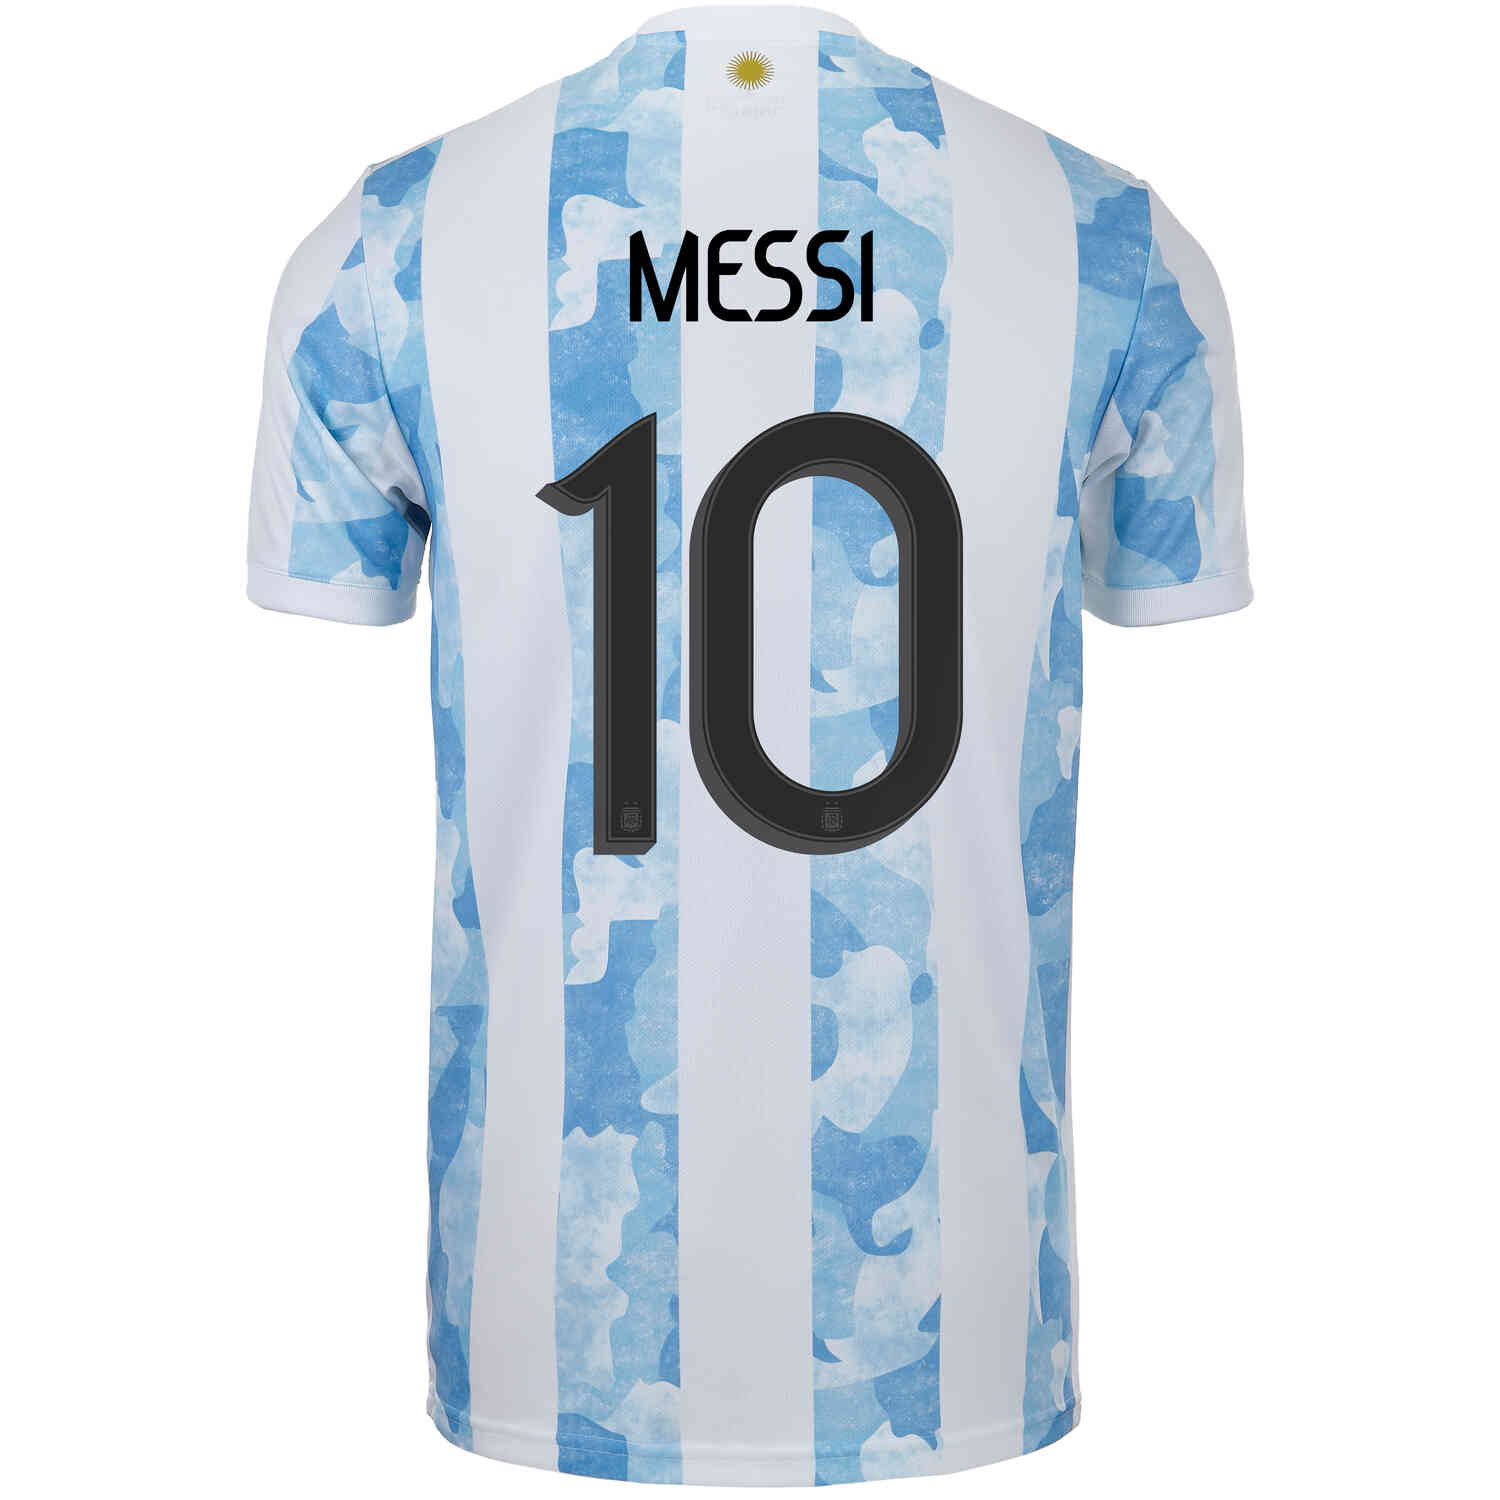 2021 adidas Messi Argentina Home - SoccerPro